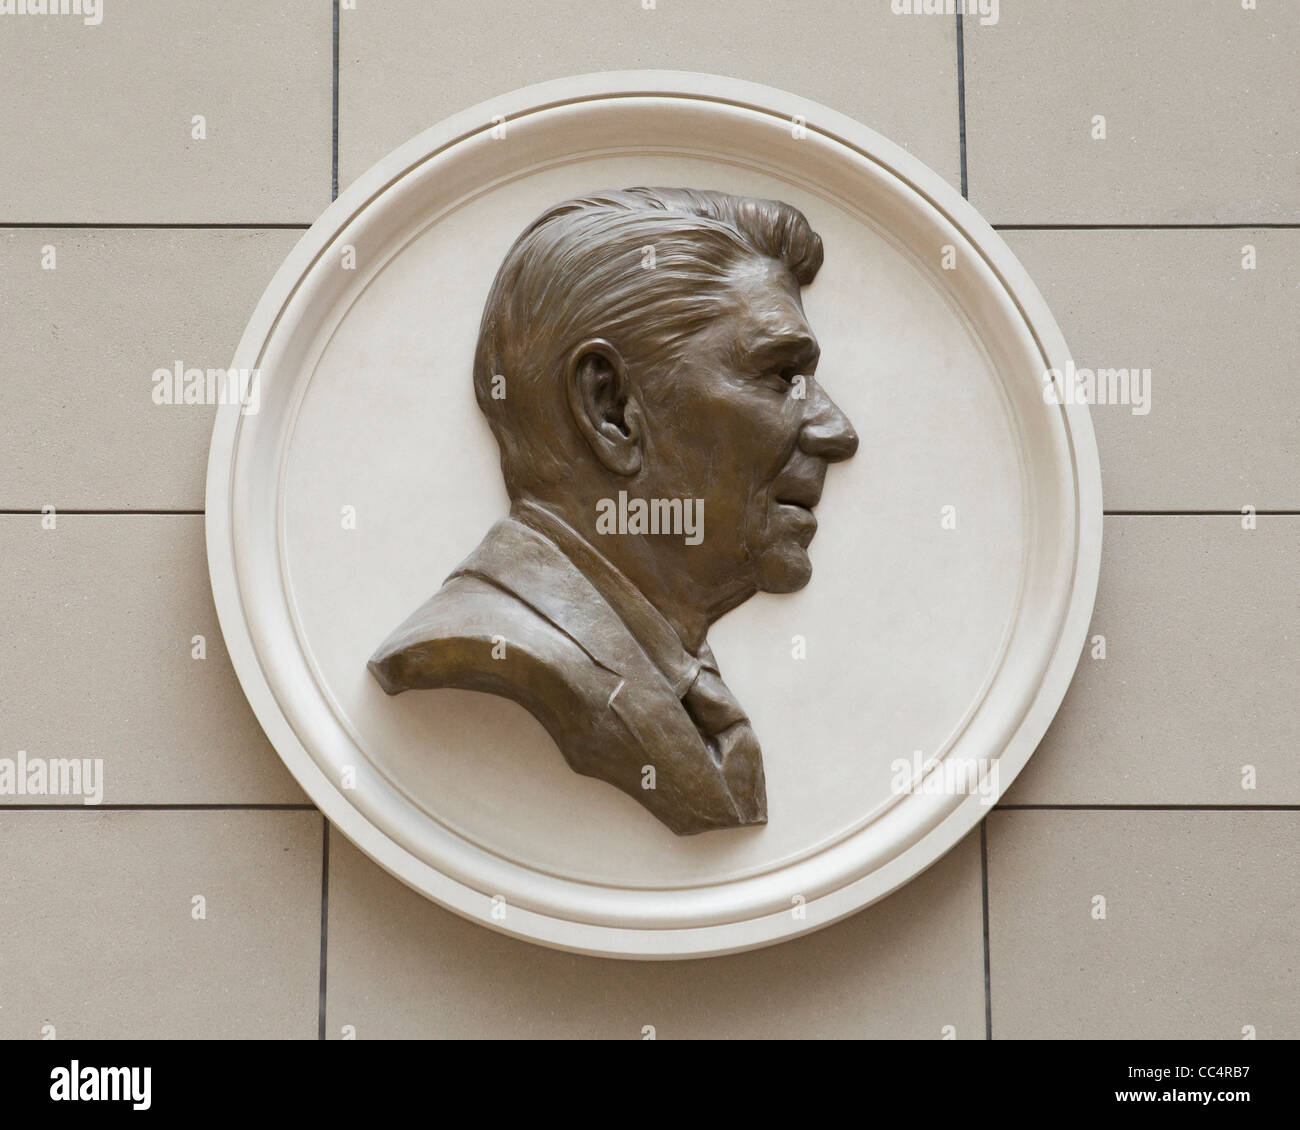 Relief sculpture of Ronald Reagan Stock Photo